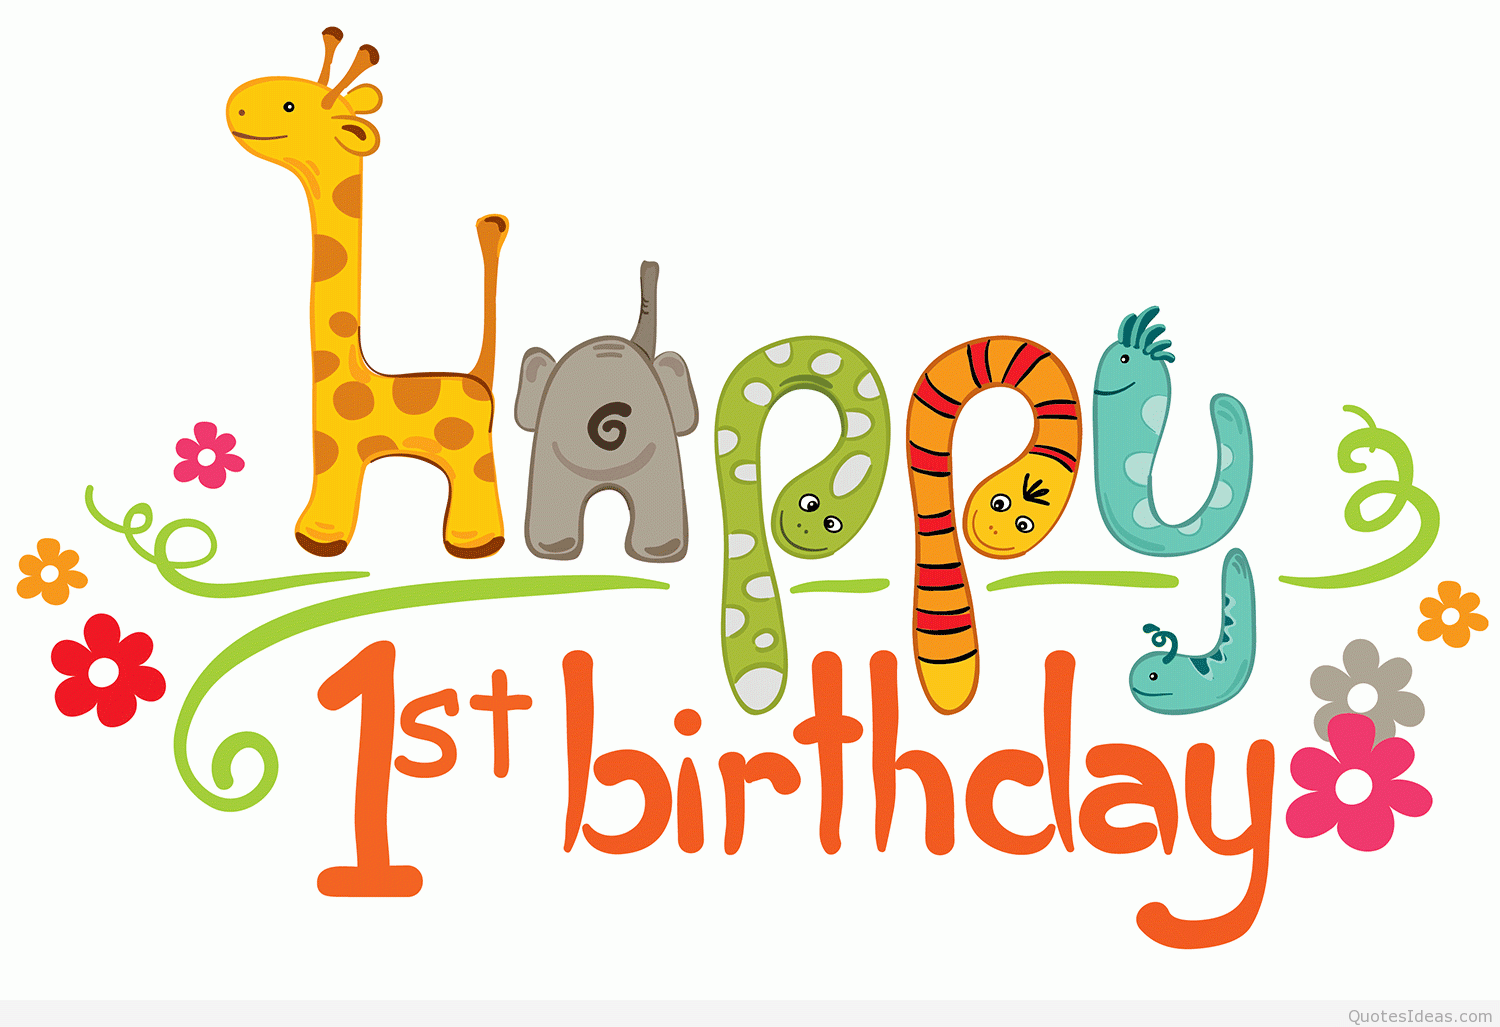 Happy 1st birthday wish wallpaper HD. First birthday wishes, 1st birthday wishes, Happy birthday baby girl